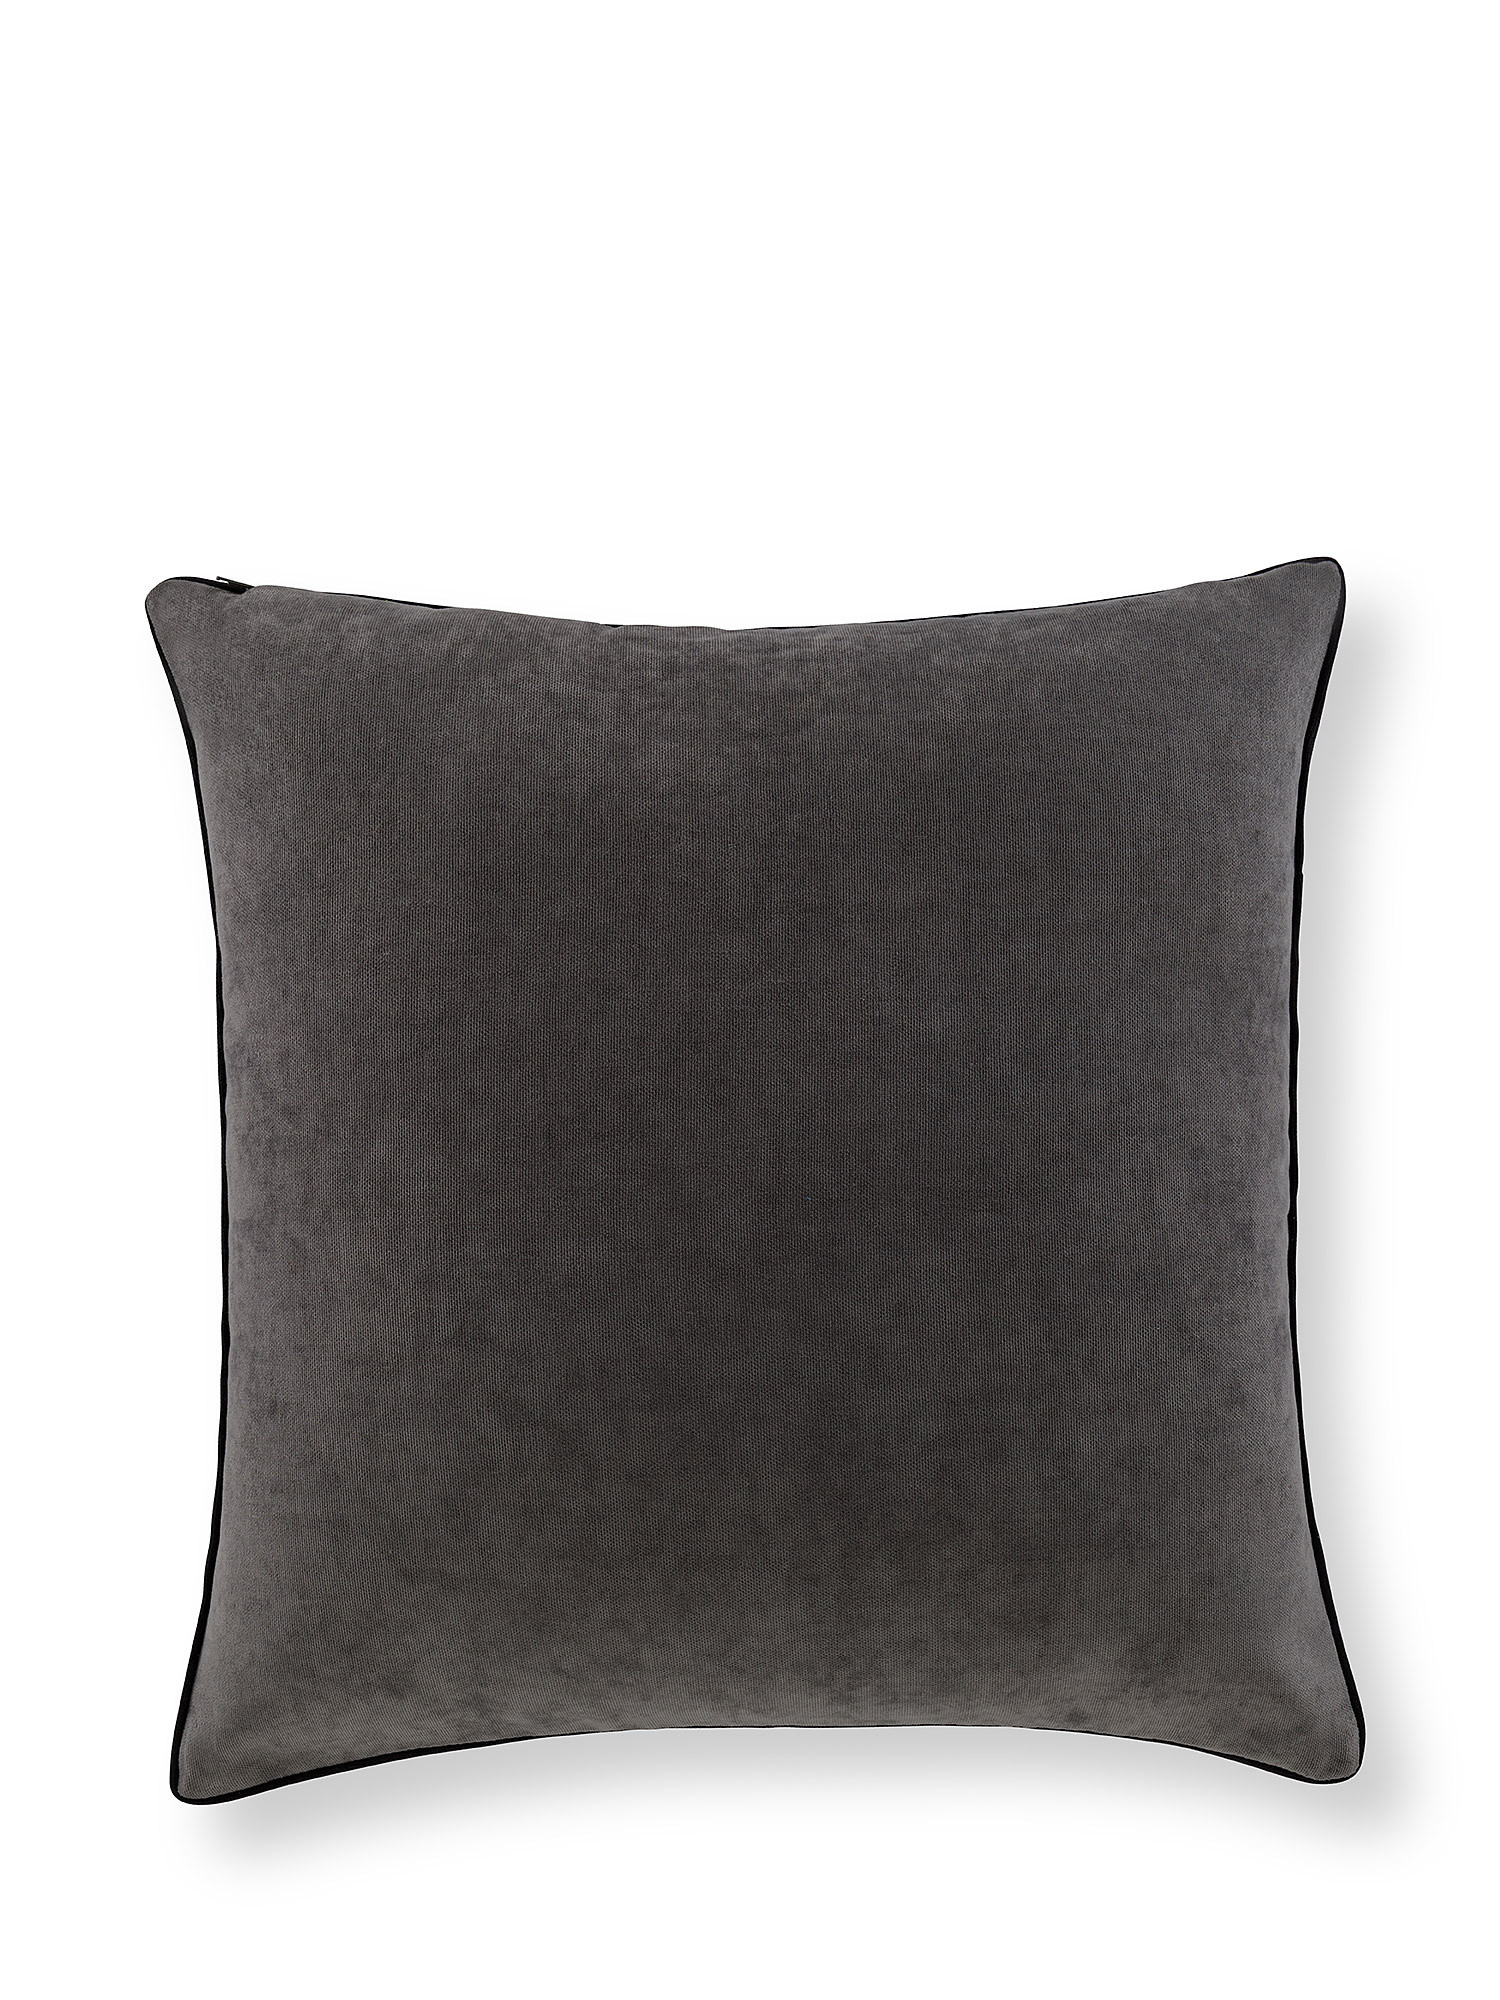 Jacquard cushion with striped motif 45x45cm, Black, large image number 1